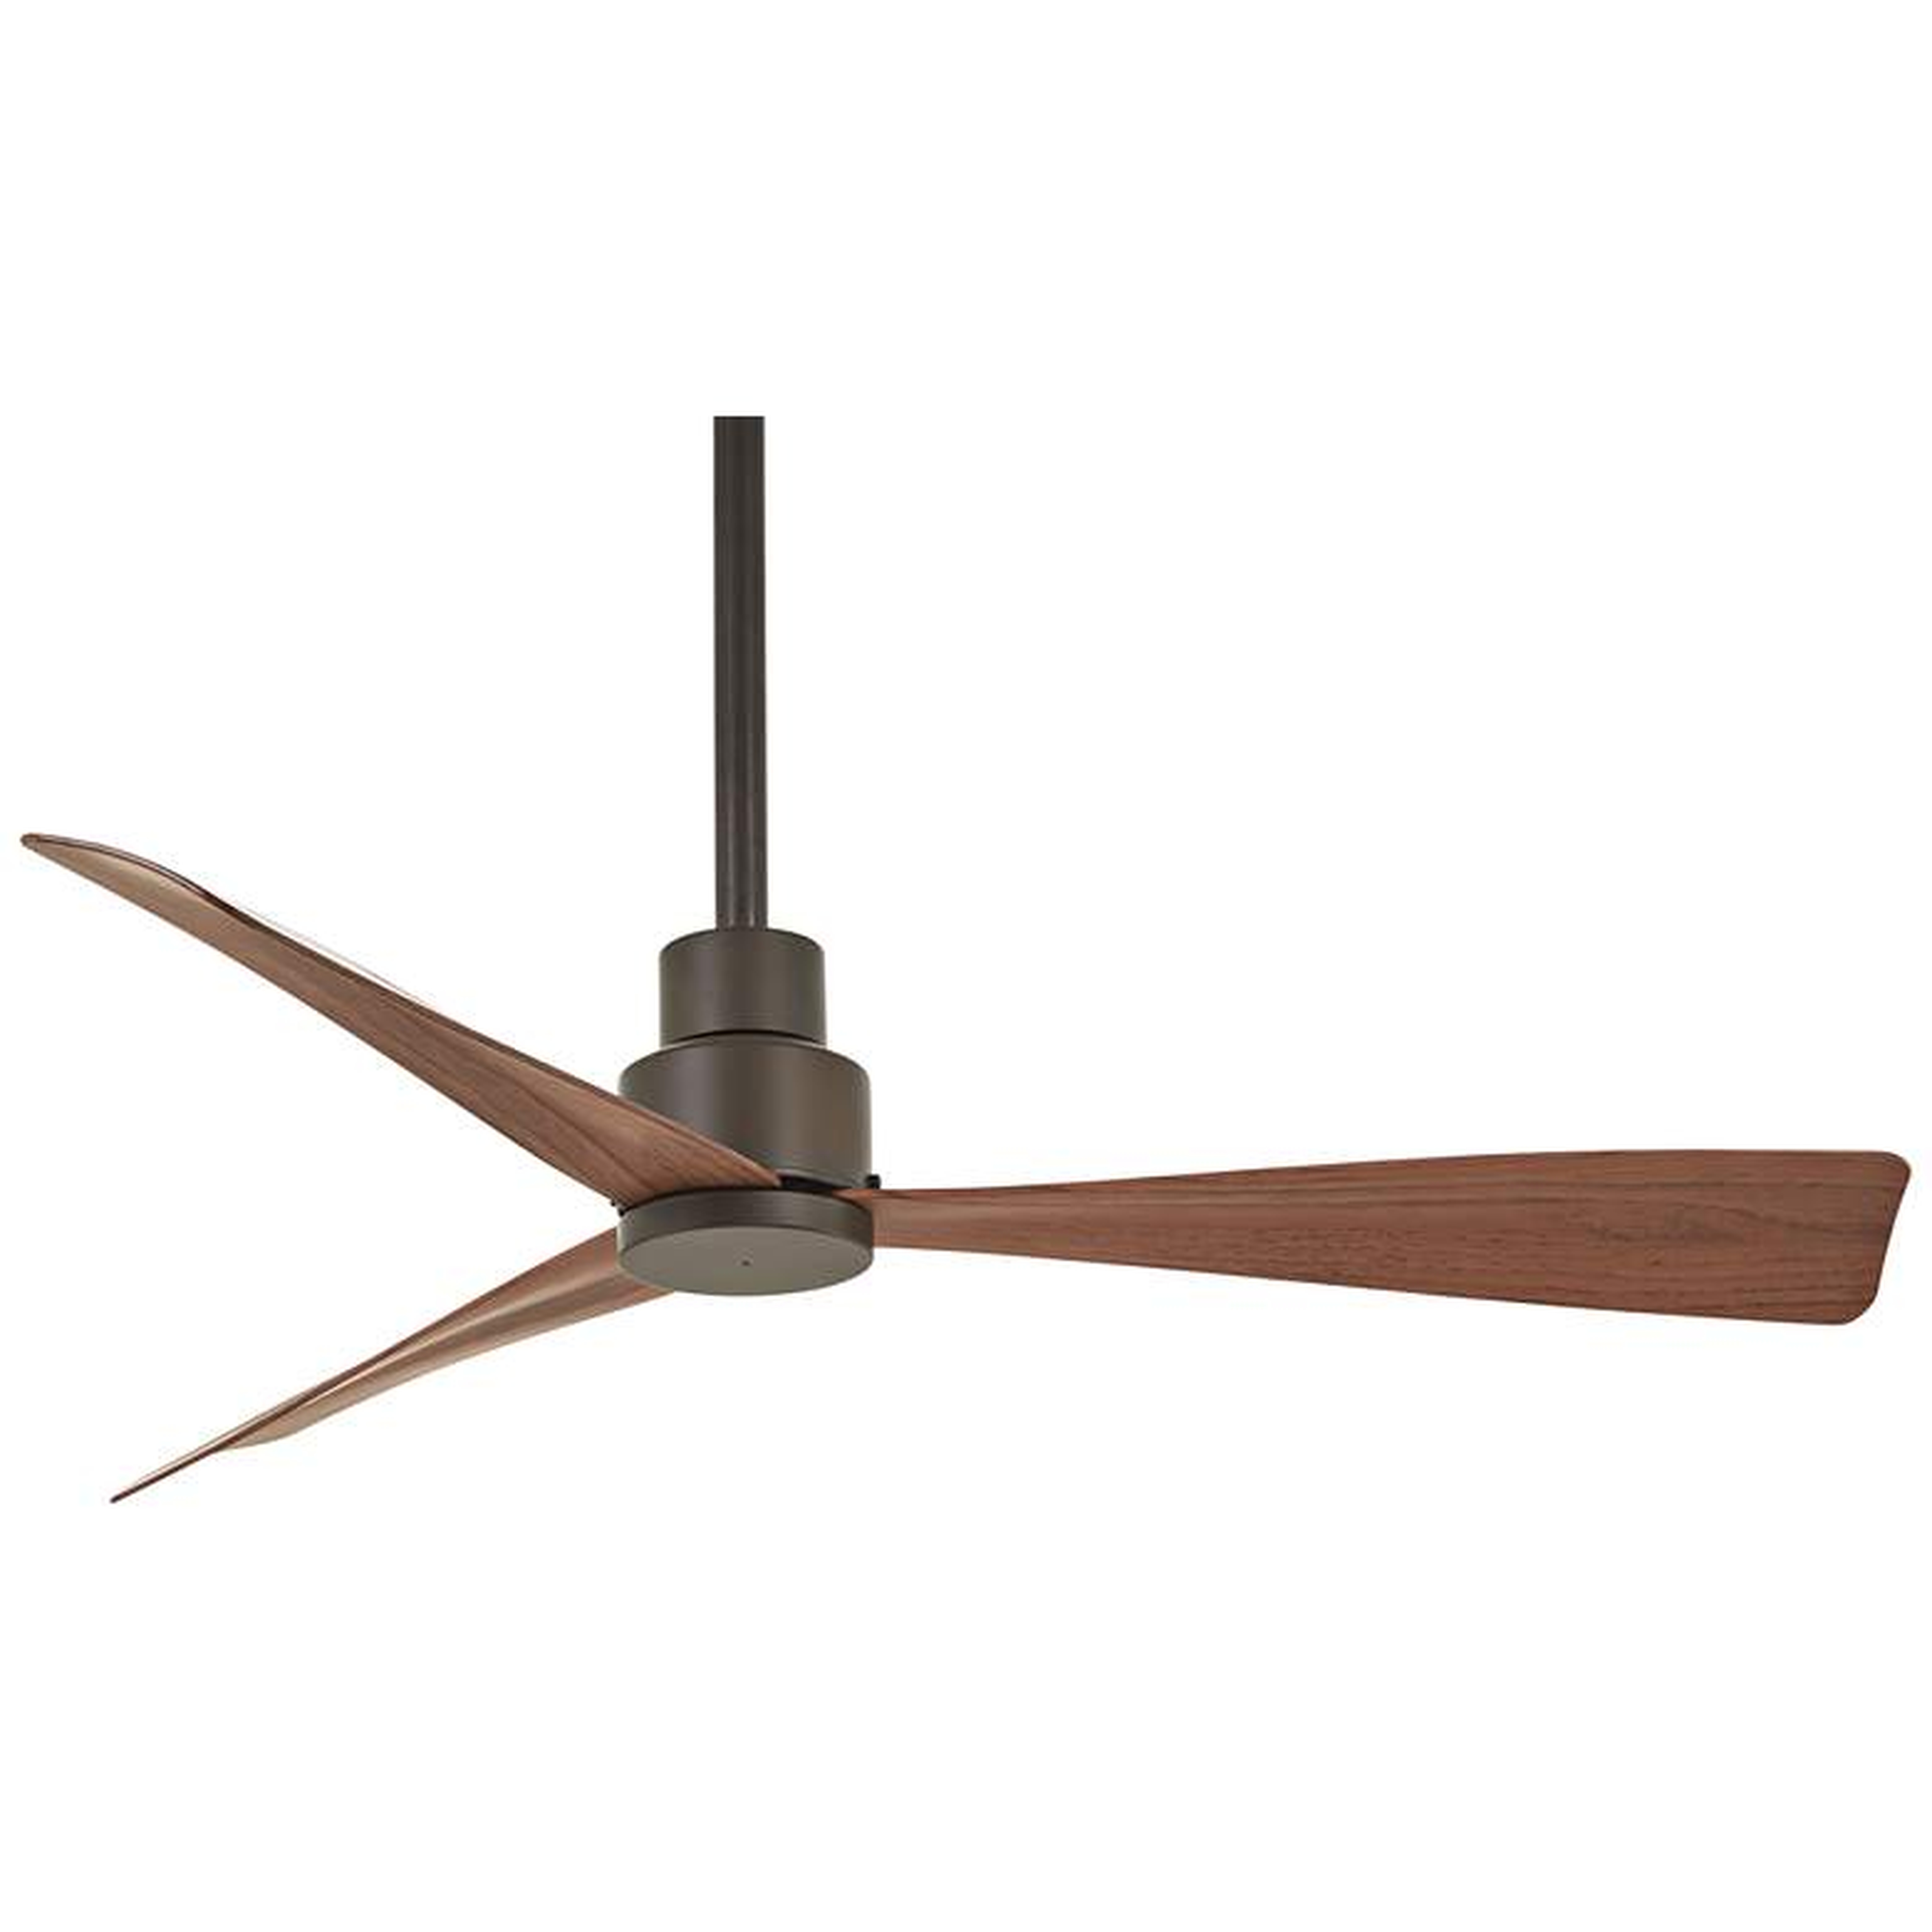 44" Minka Aire Simple Oil-Rubbed Bronze Outdoor Ceiling Fan - Lamps Plus